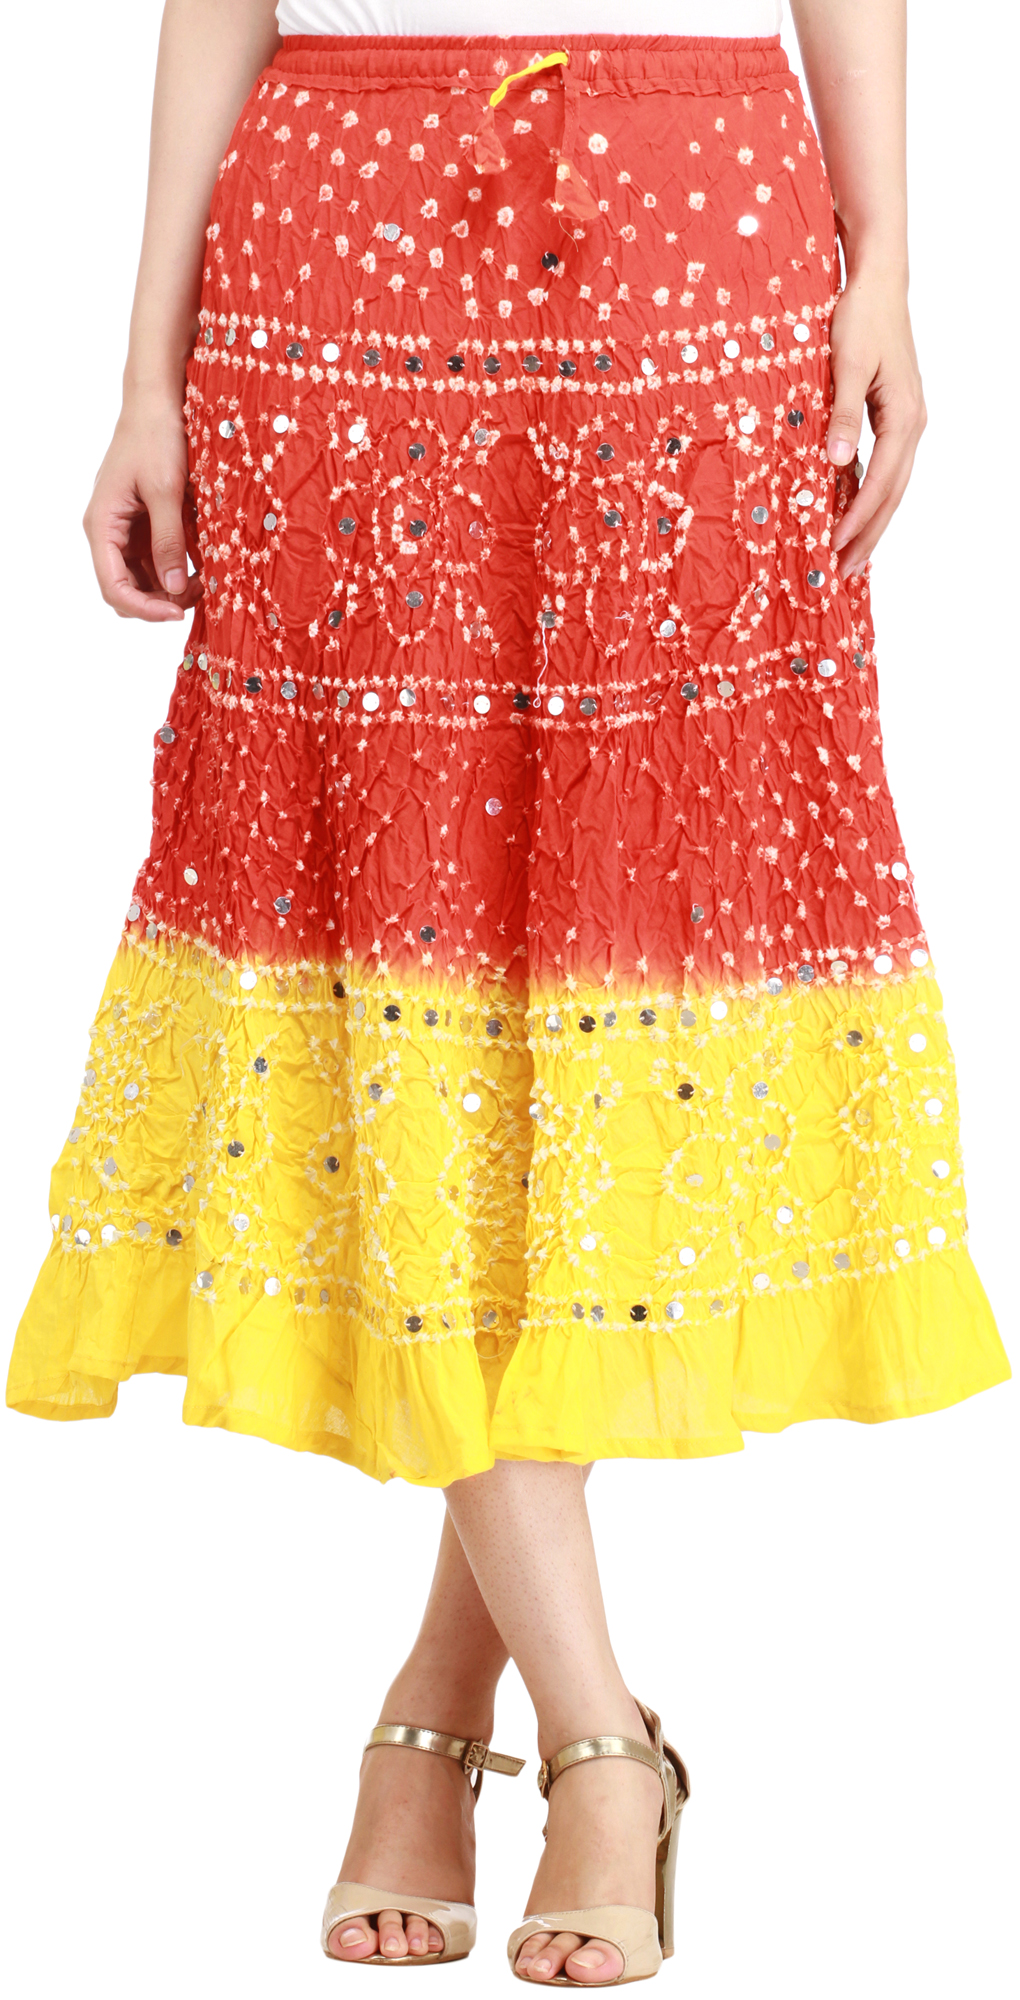 Buy Exotic India Cotton Full Skirt KS96 BlackFree Size at Amazonin